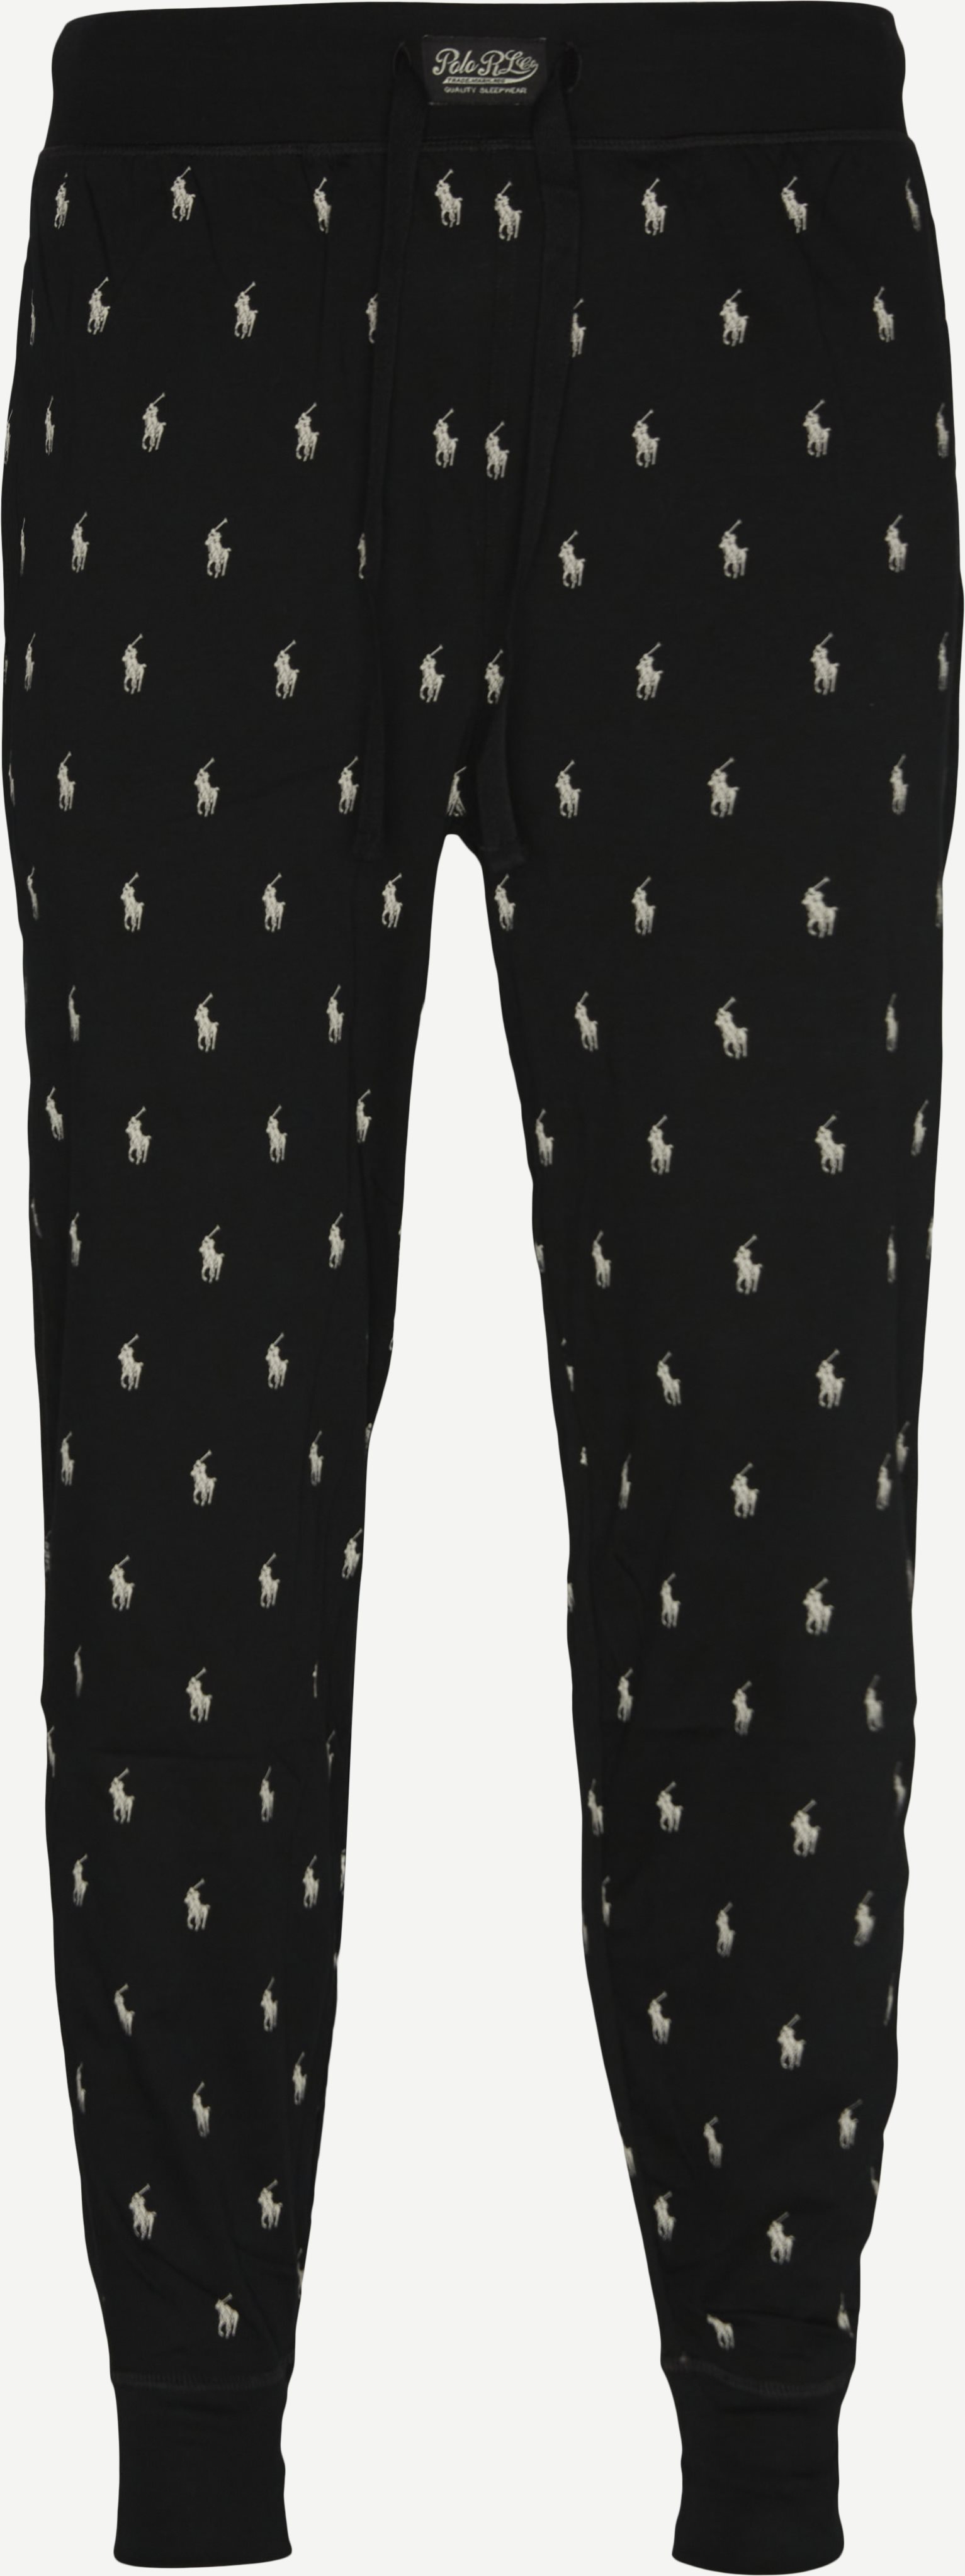 Pajama pants - Underwear - Regular fit - Black